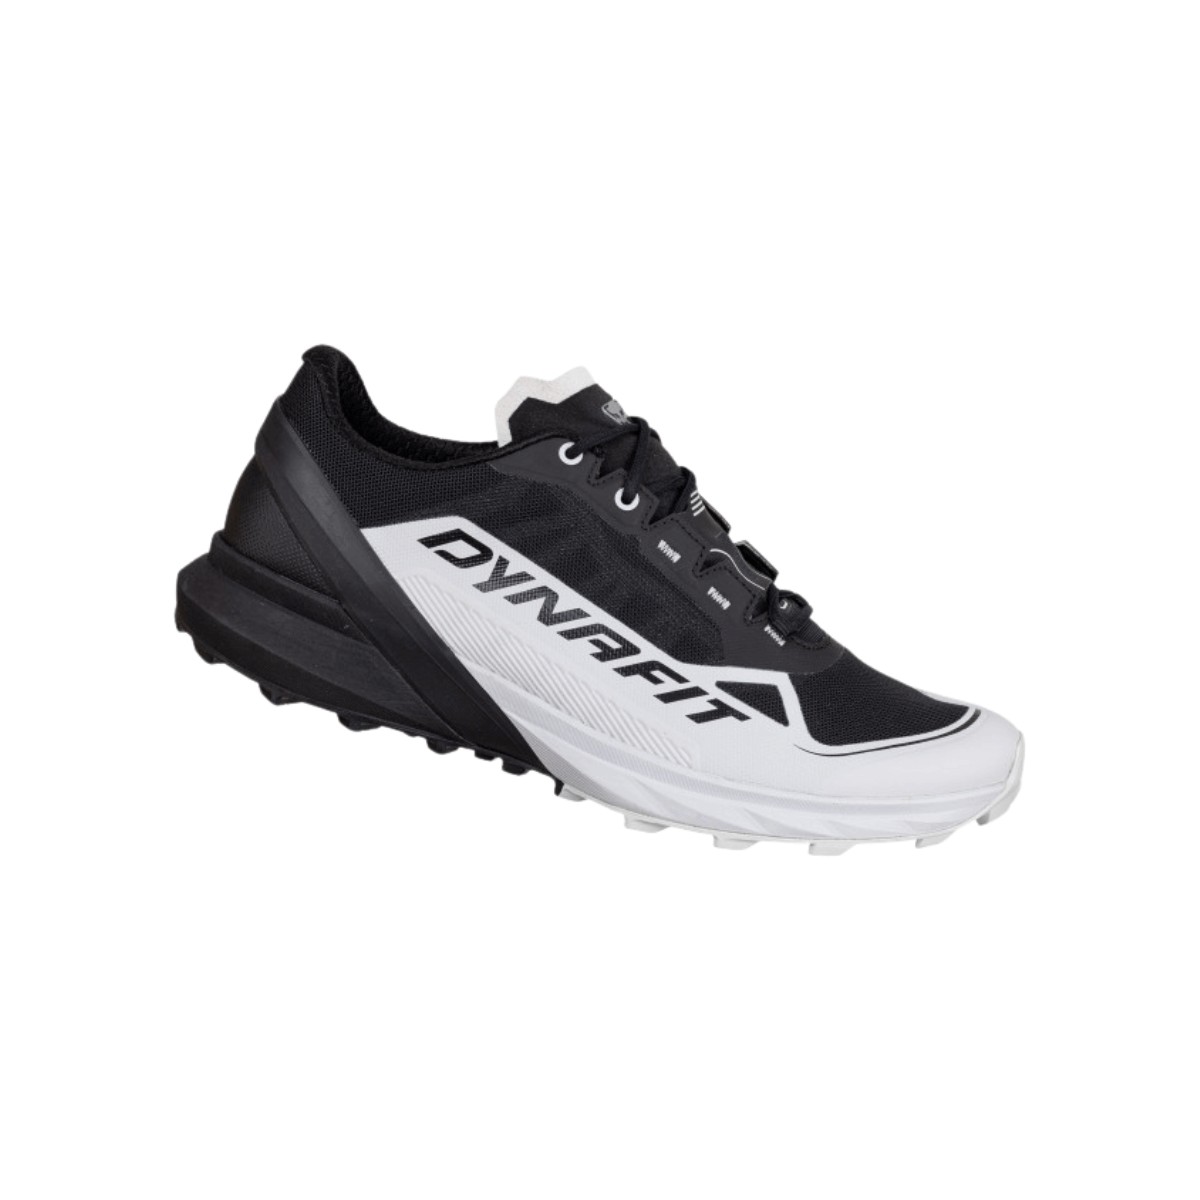 Chaussures Dynafit Ultra 50 Noir Noir Blanc AW22, Taille 41 - EUR